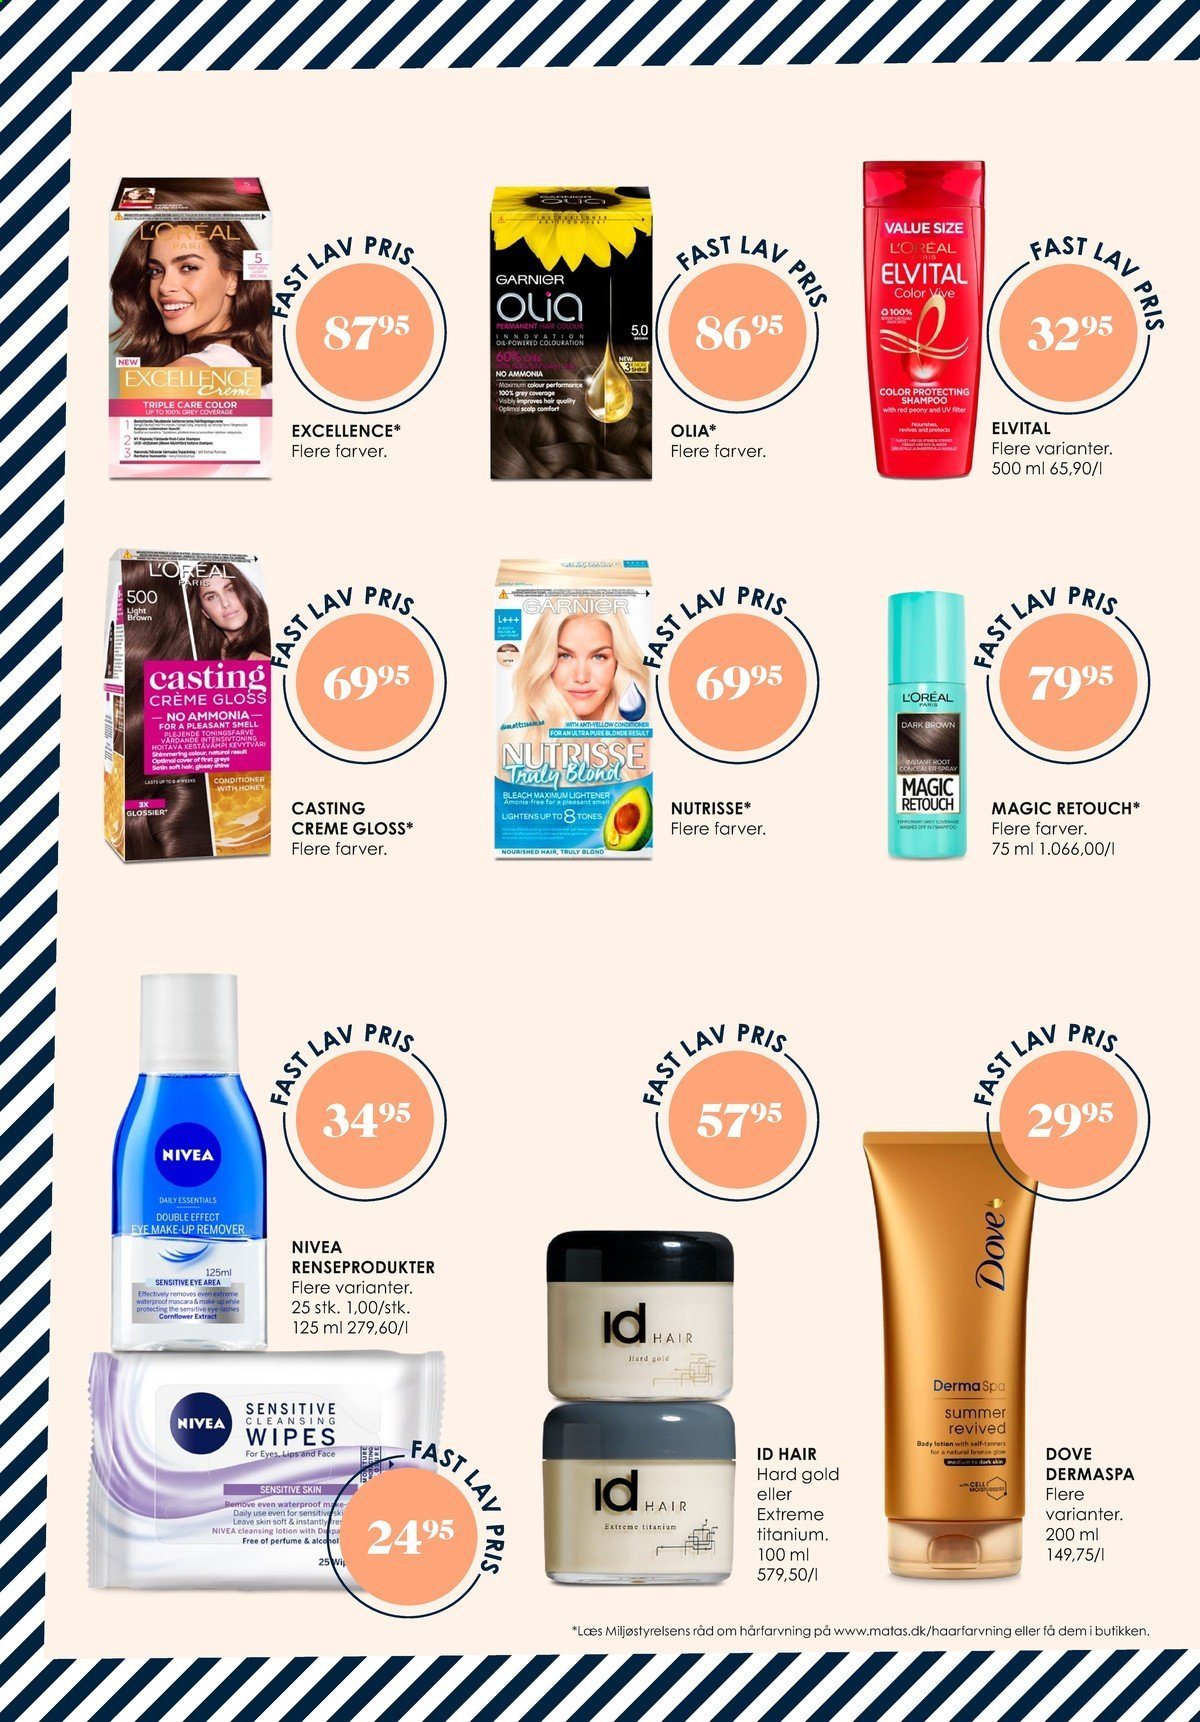 thumbnail - Matas tilbud  - 14.1.2021 - 27.1.2021 - tilbudsprodukter - Derma, Dove, Essentials, Garnier, L'Oréal Paris, Nivea, ID Hair, body lotion. Side 4.